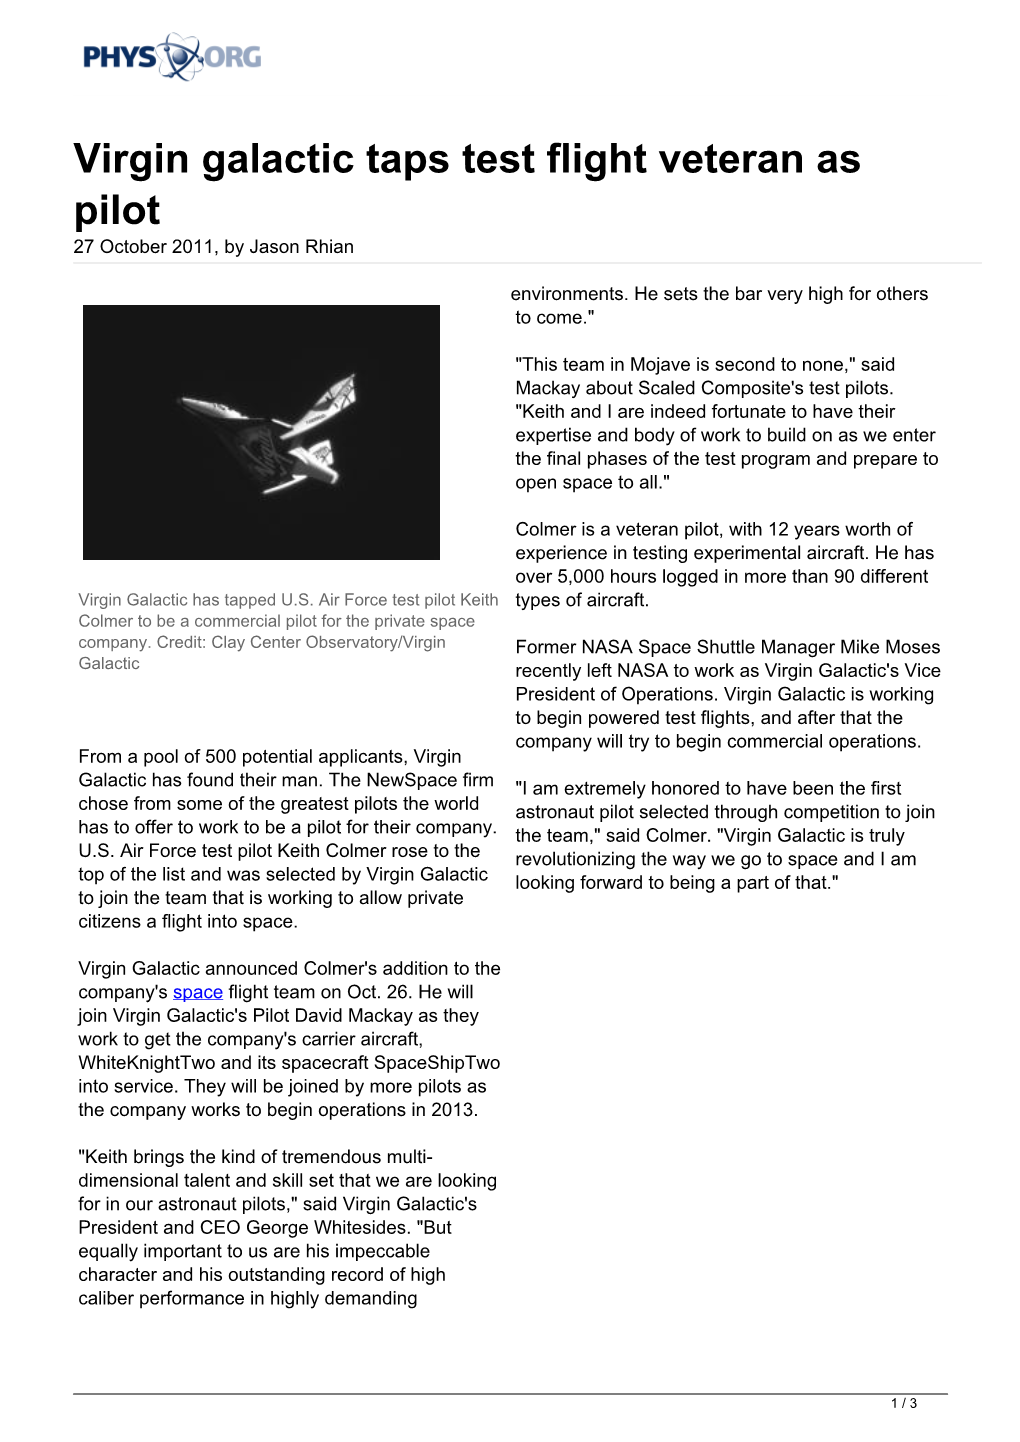 Virgin Galactic Taps Test Flight Veteran As Pilot 27 October 2011, by Jason Rhian